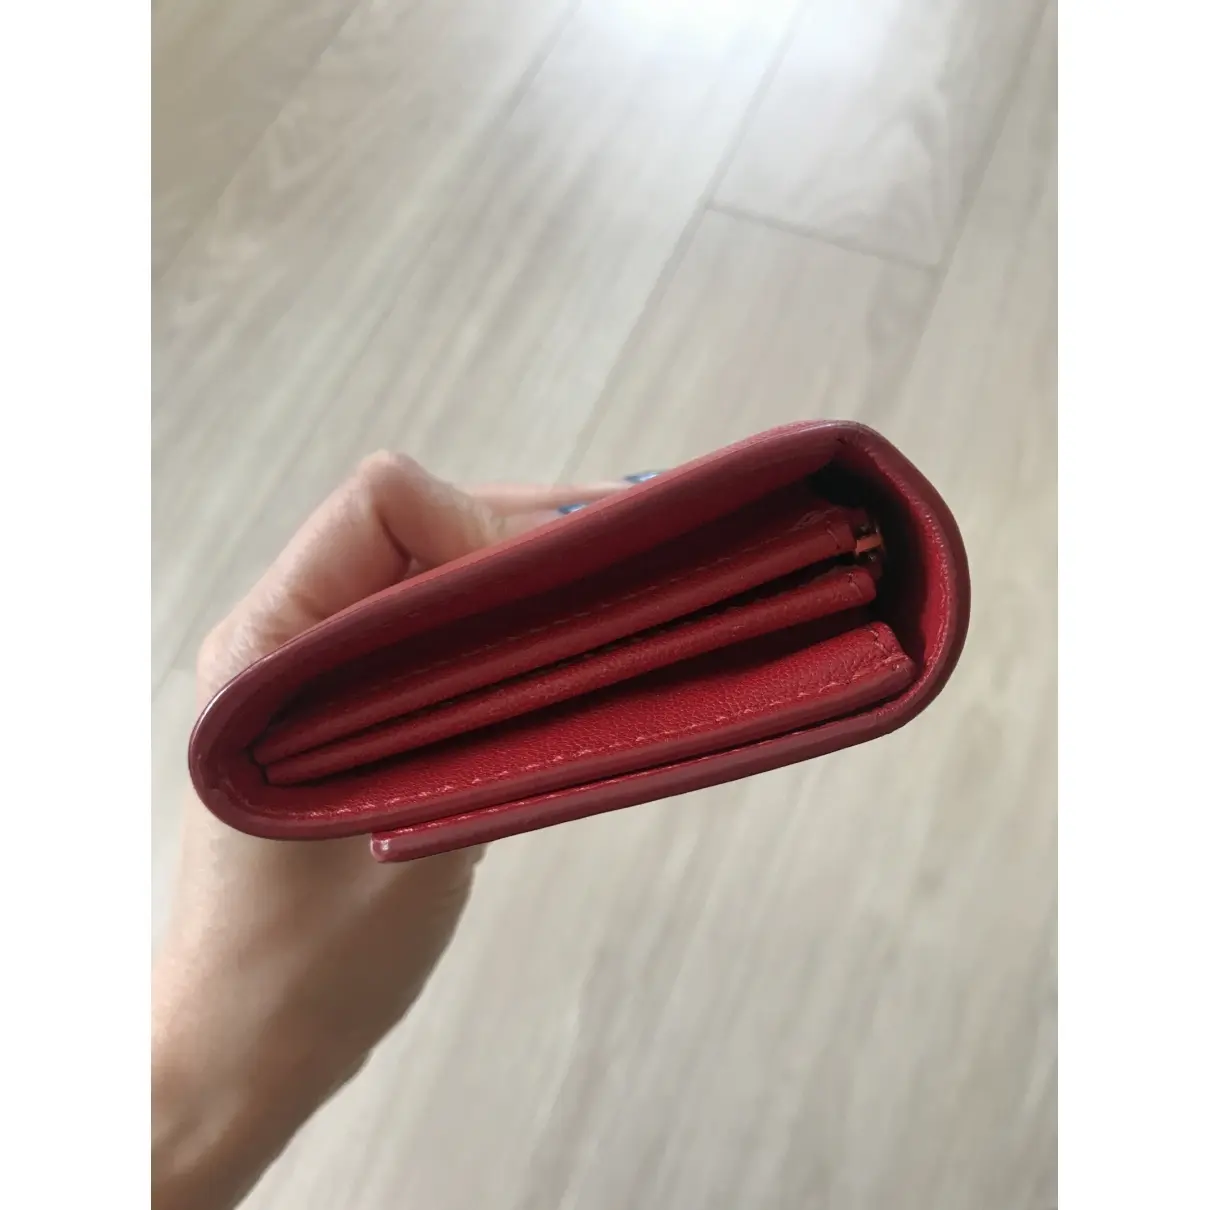 Buy Celine Leather wallet online